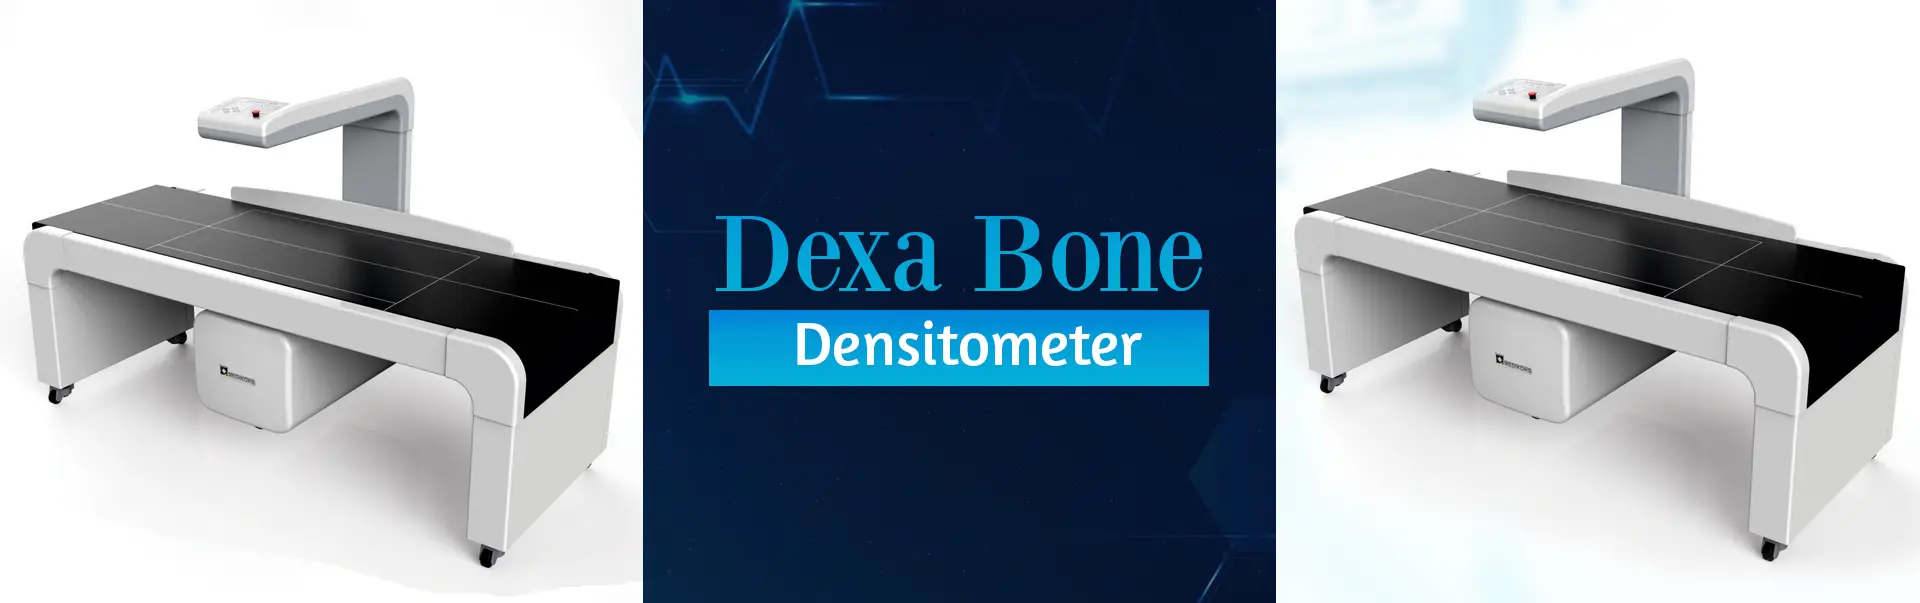 Dexa Bone Densitometer Manufacturers in Visakhapatnam